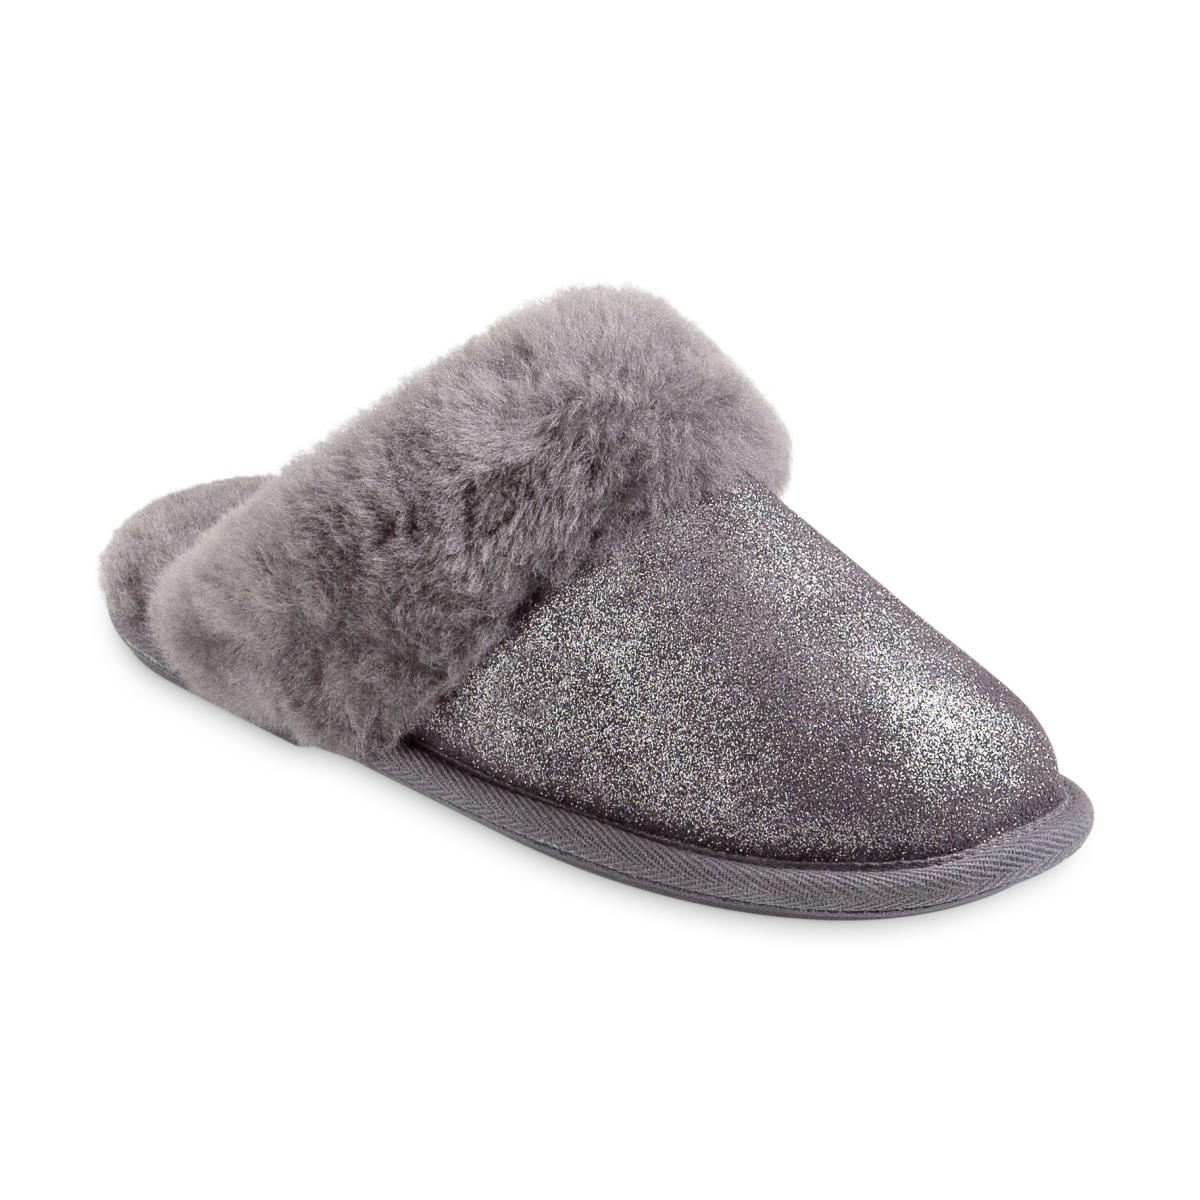 Ladies Duchess Sheepskin Slippers | Just Sheepskin Slippers and Boots